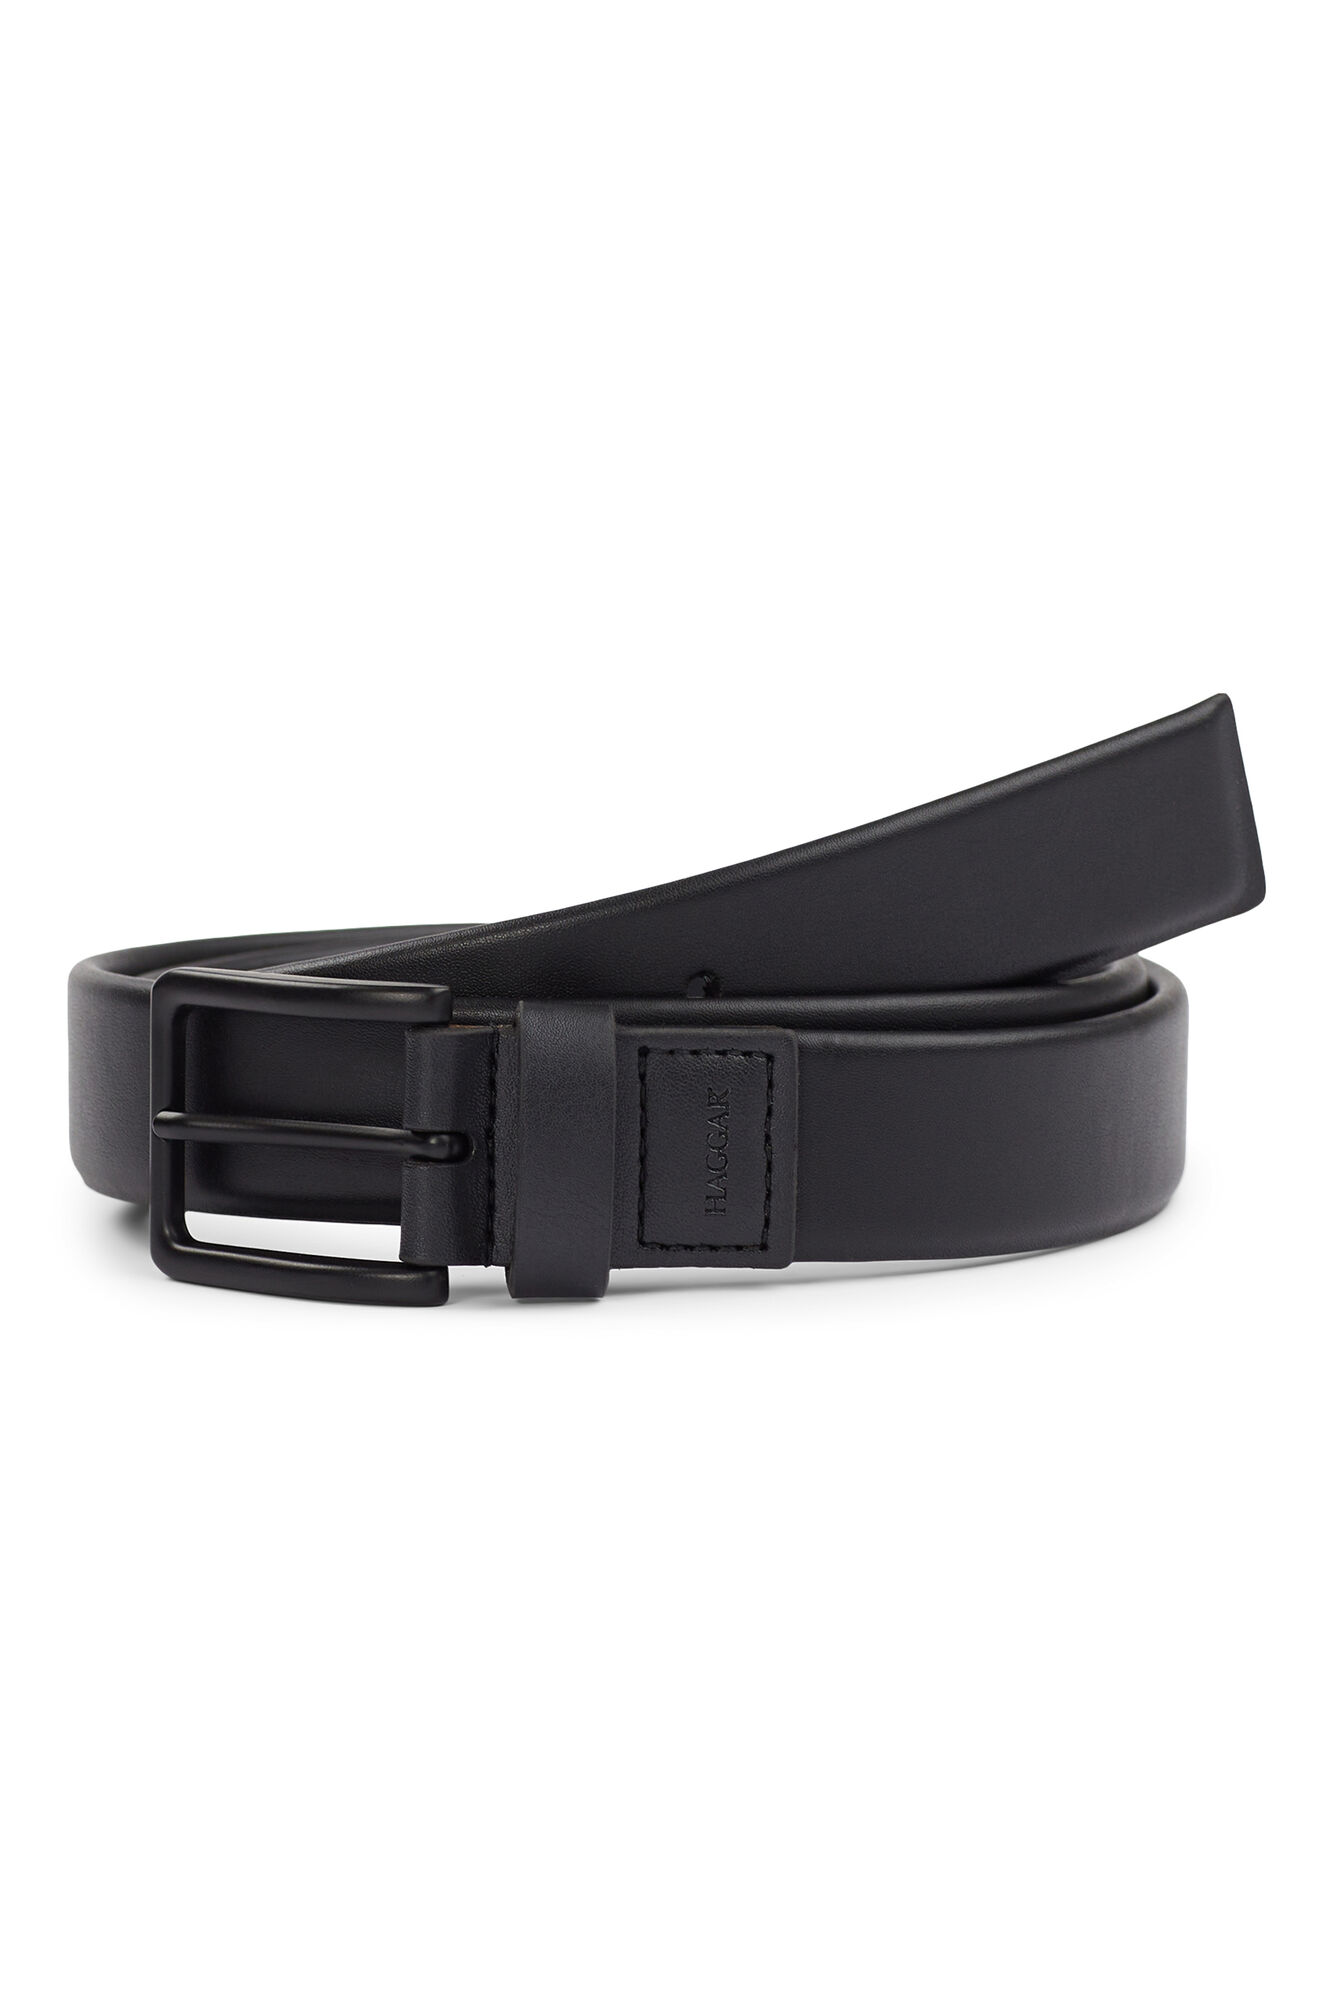 Haggar Soft Leather Stretch Belt Black (11HH120Z01) photo